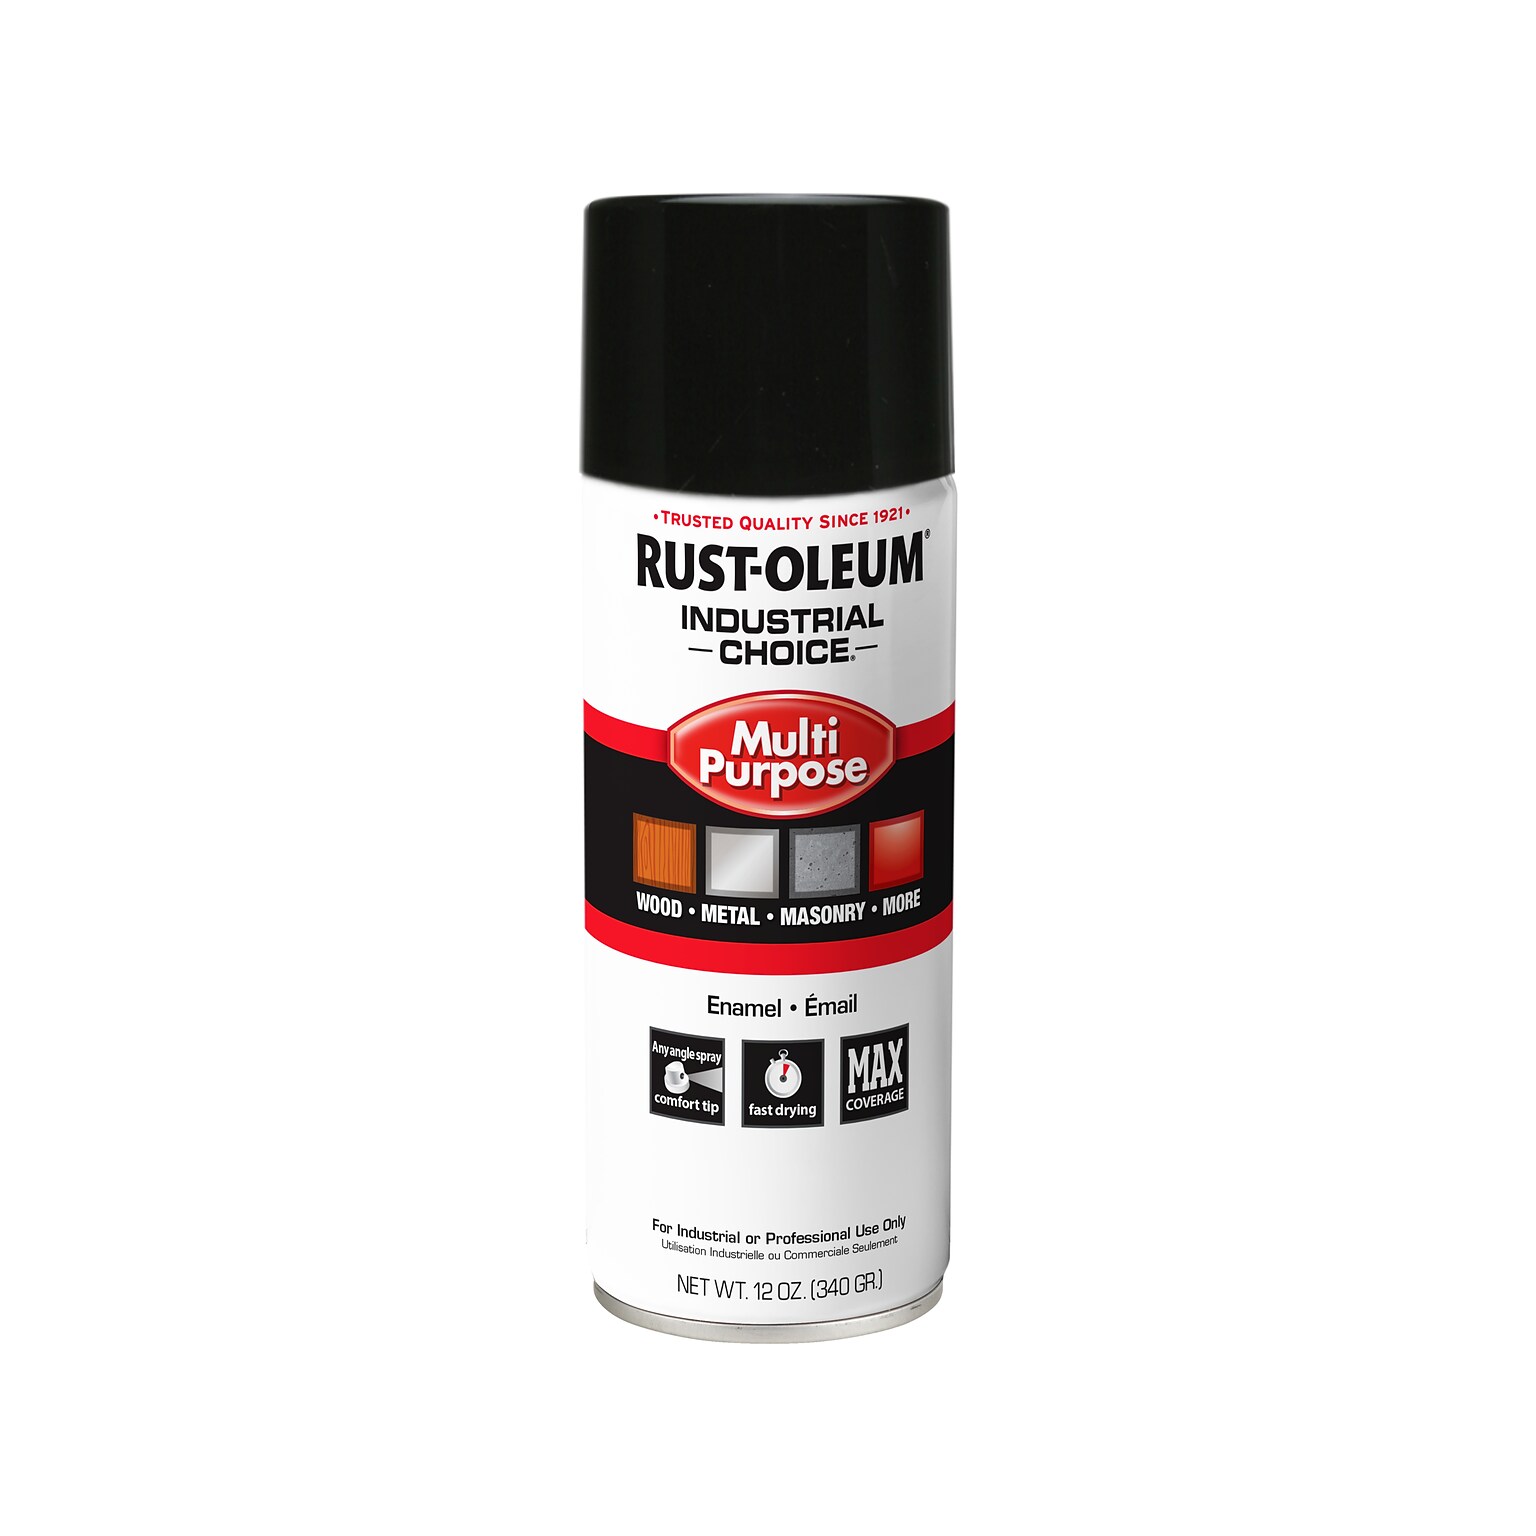 Rust-Oleum Industrial Choice Multipurpose Enamel Spray, Glossy Black, 12 Oz., 6/Pack (1679830V)